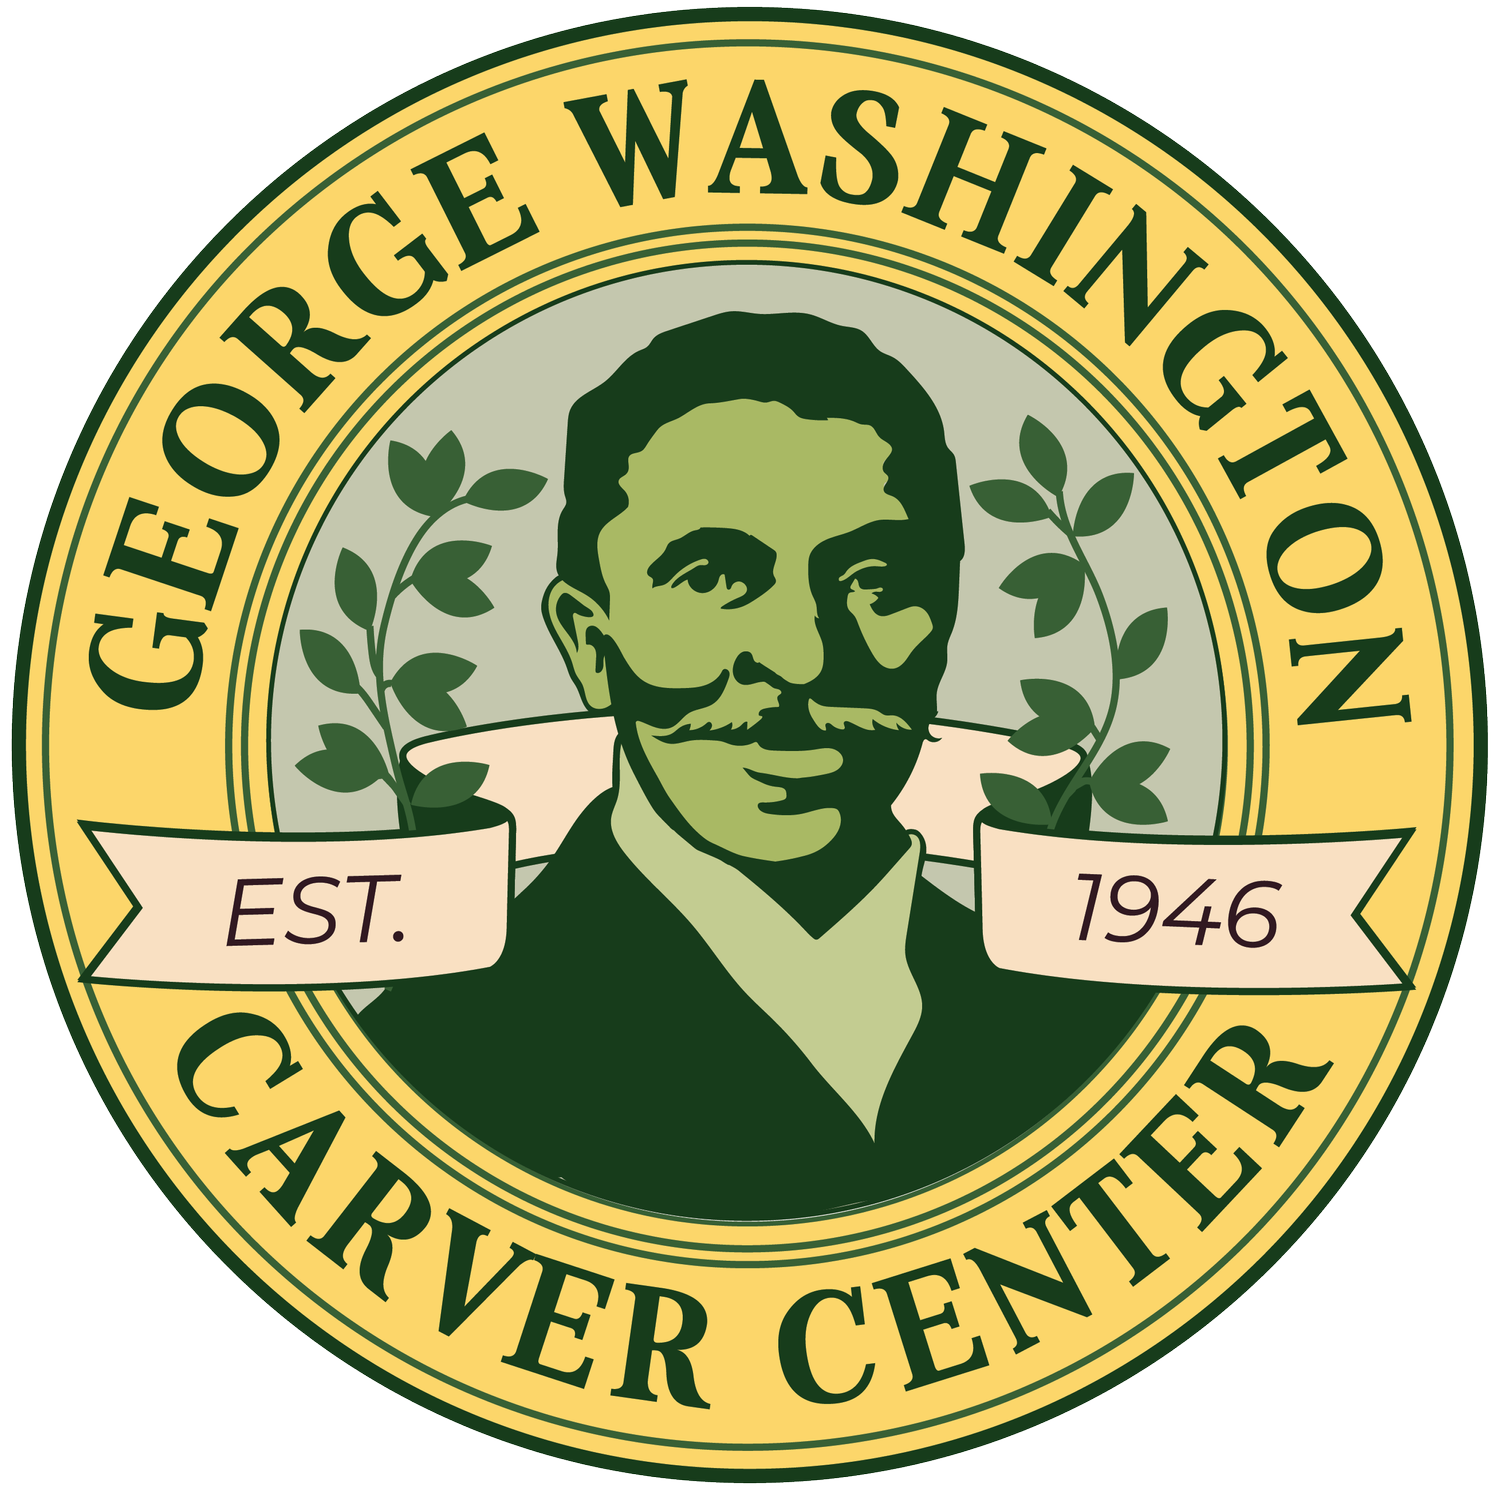 George Washington Carver Center